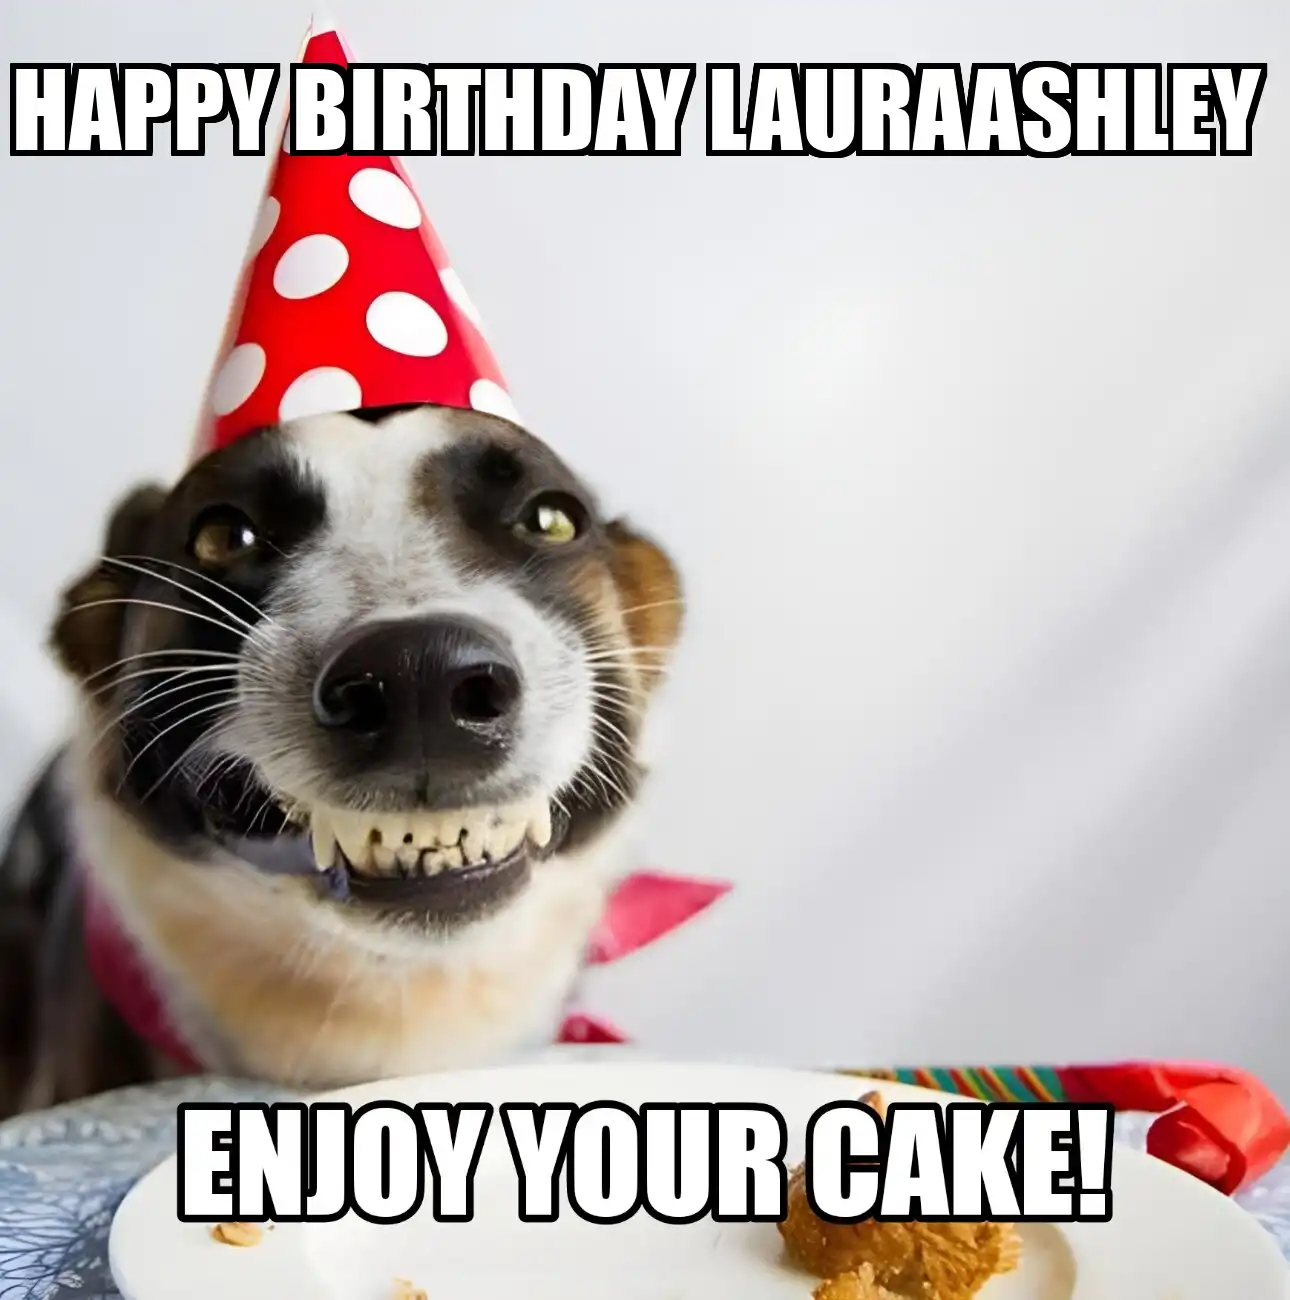 Happy Birthday Lauraashley Enjoy Your Cake Dog Meme